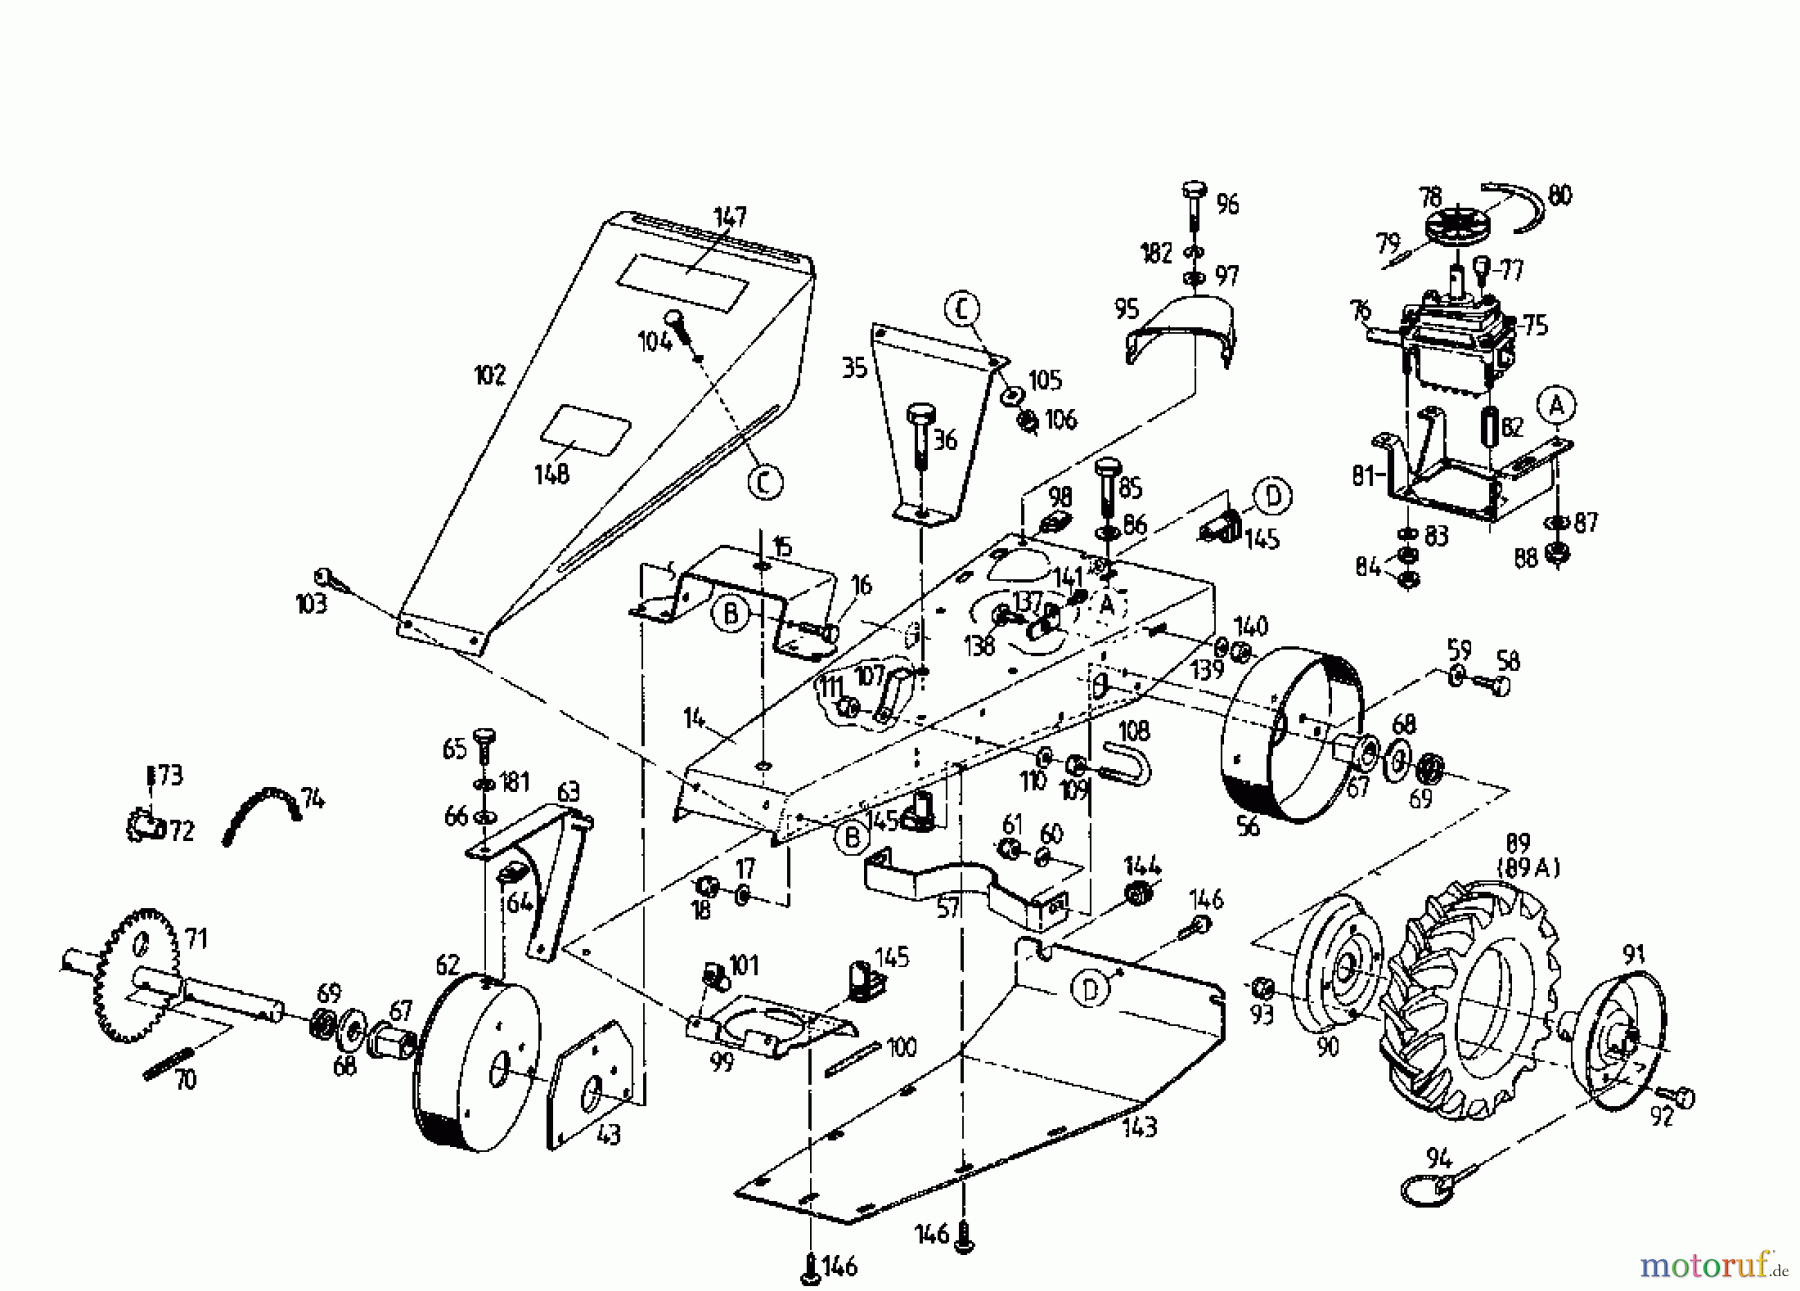  Gutbrod Cutter bar mower BM 700 07510.04  (1996) Drive system, Wheels